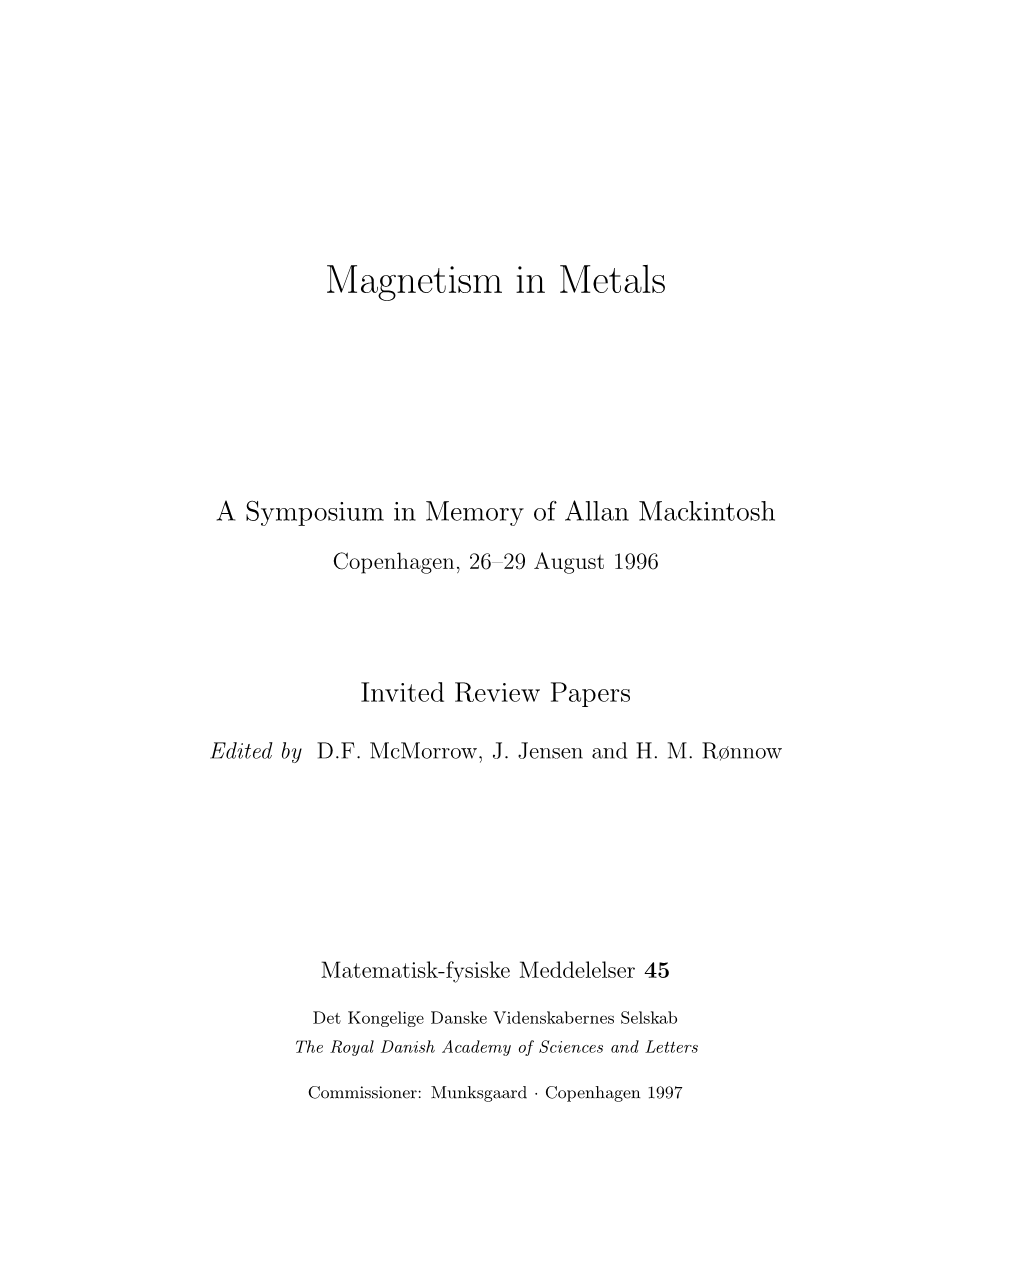 Symposium in Memory of Allan Mackintosh